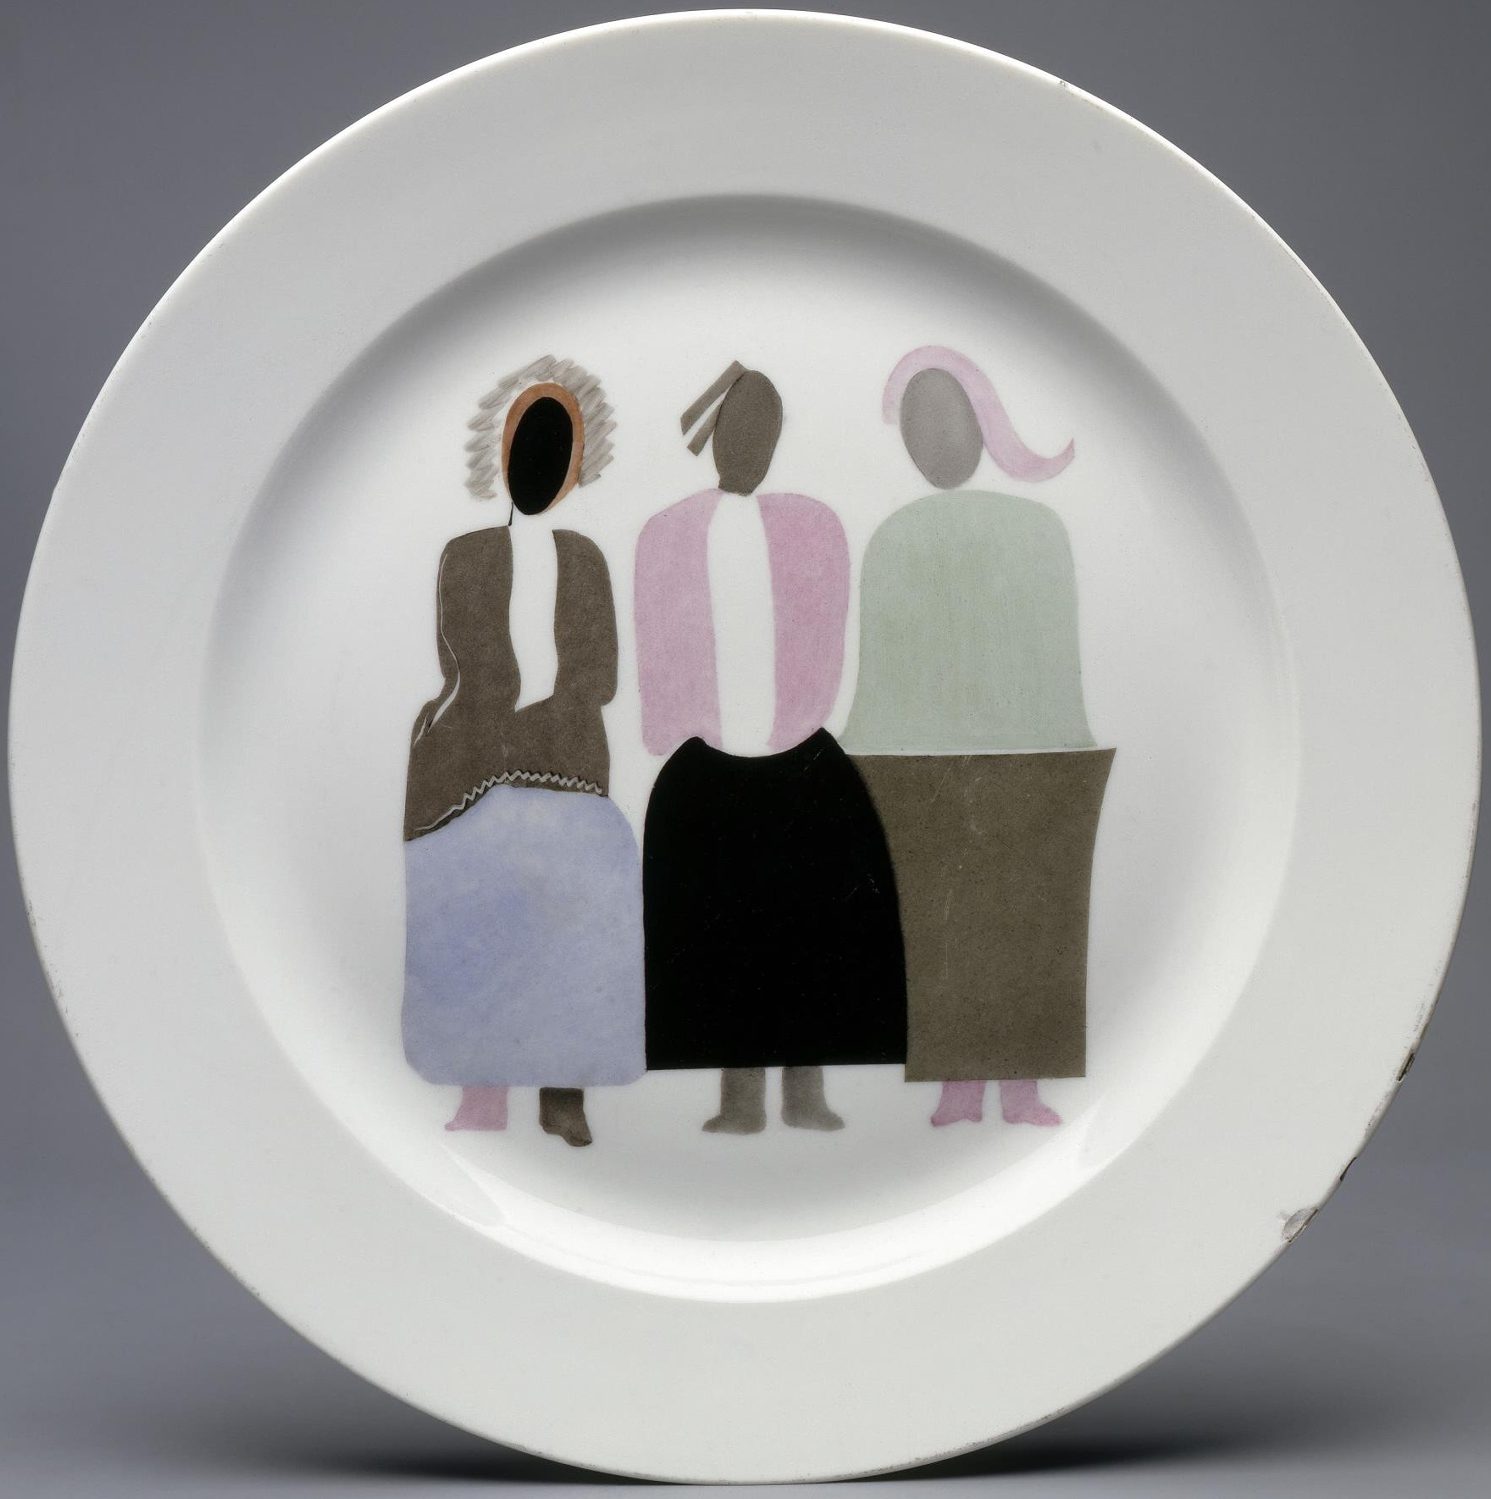 Soviet porcelain platter "Three Women". Suprematism. Nikolai Suetin. Lomonosov State Porcelain factory, St Petersburg, USSR. 1929